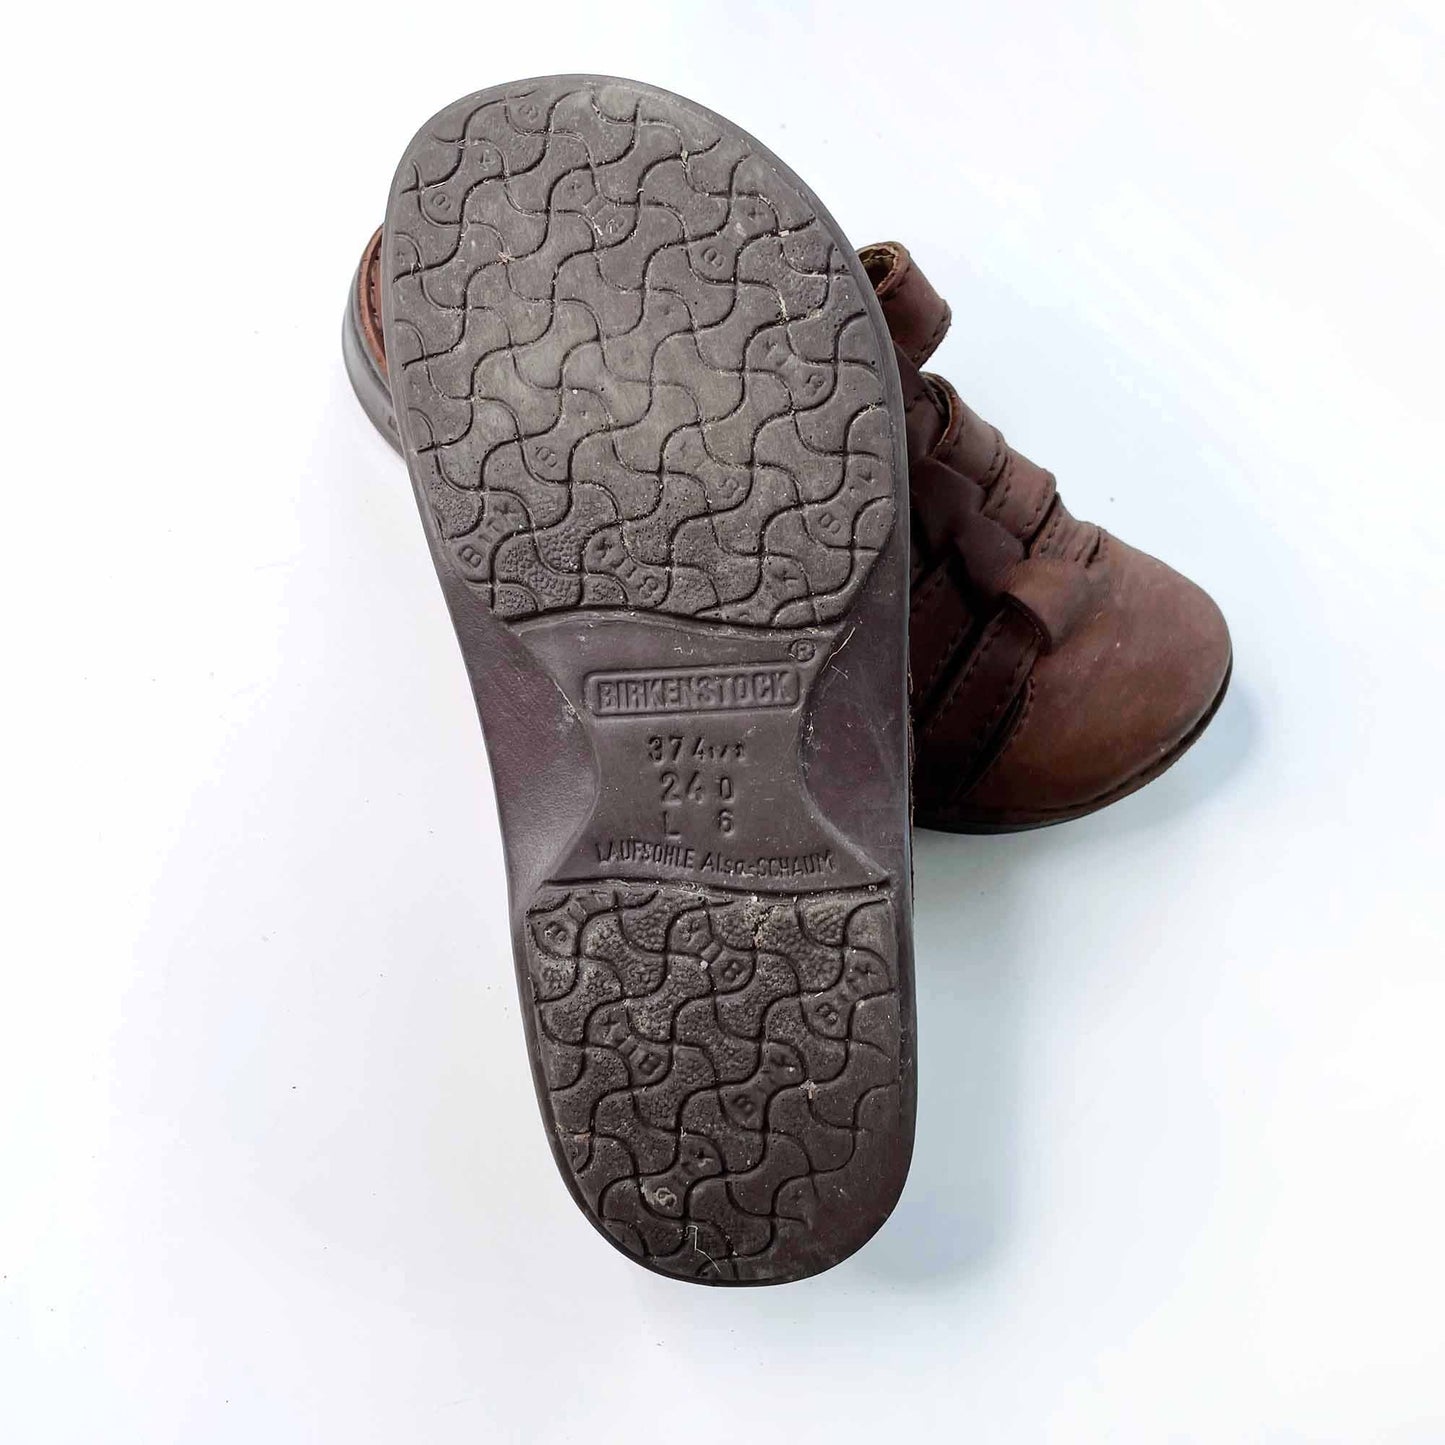 birkenstock leather fisherman sandals - size 37